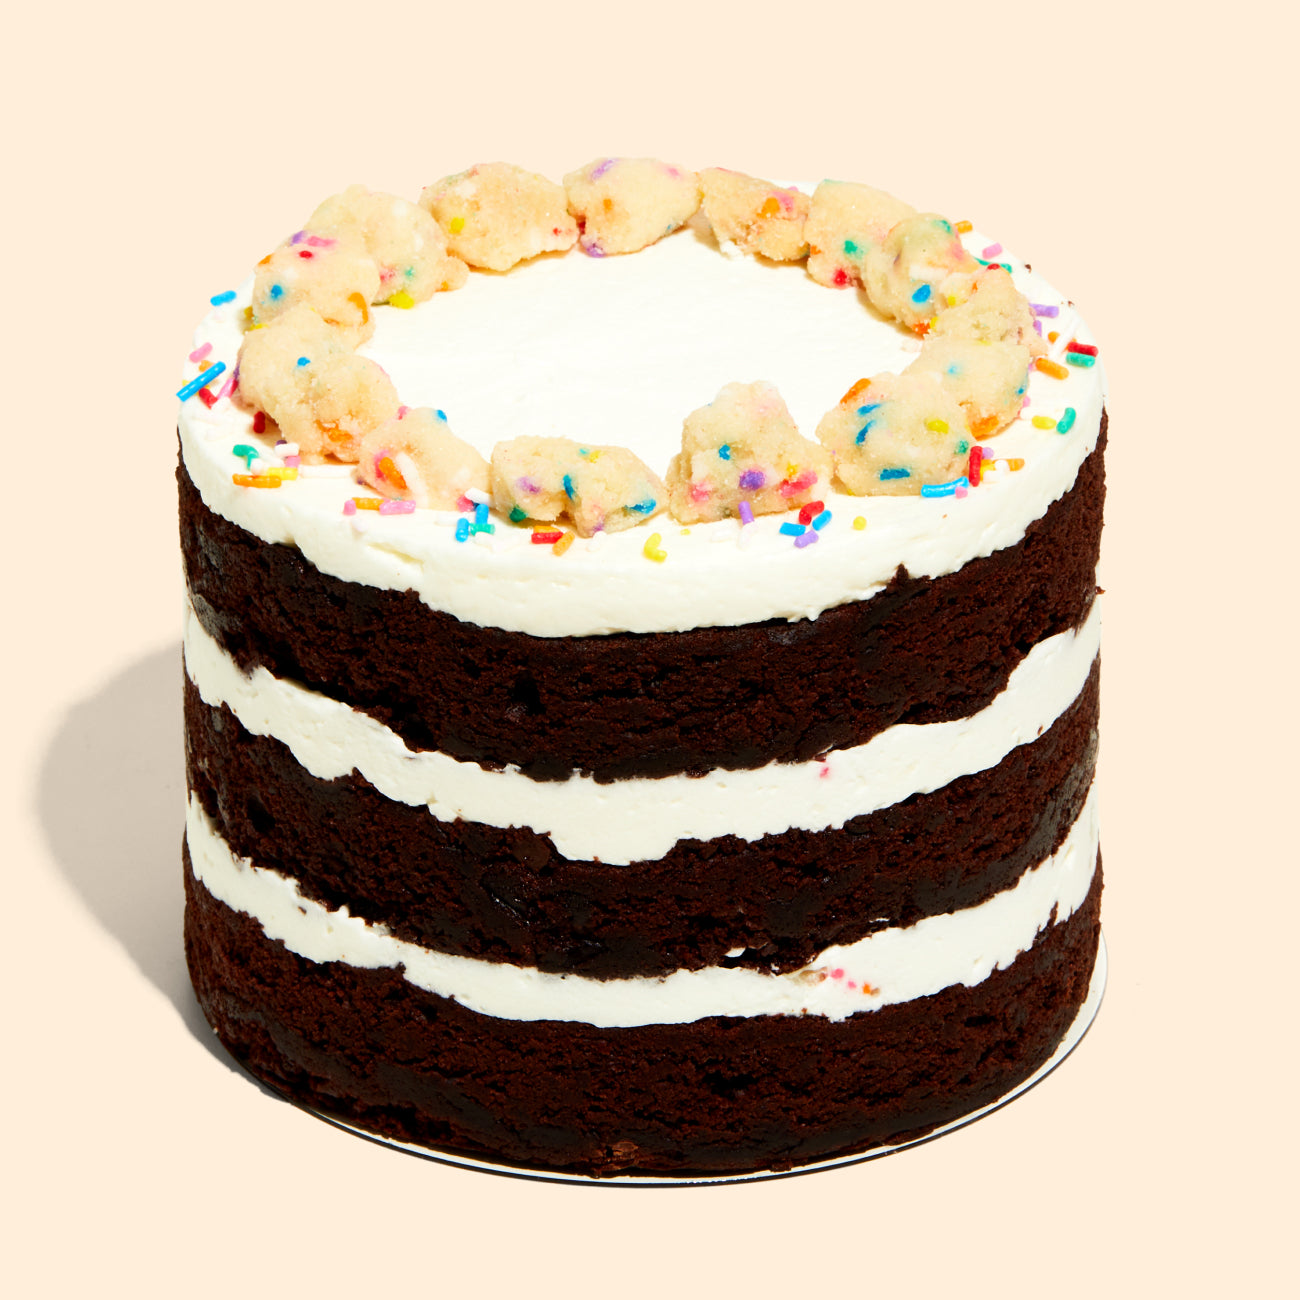 animated birthday cake with name